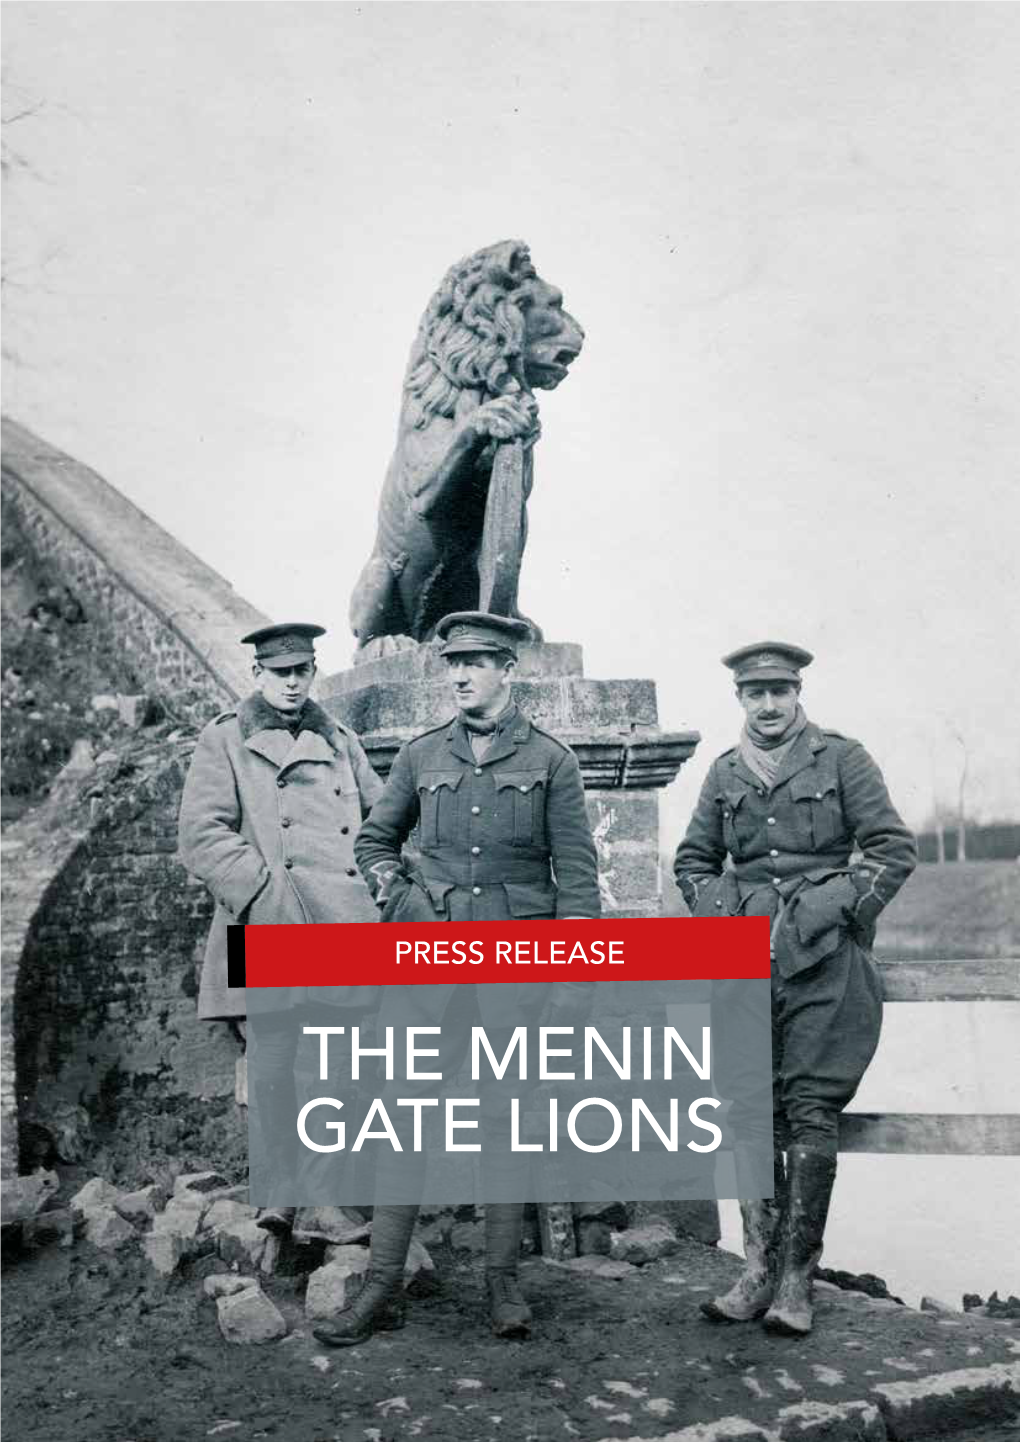 THE MENIN GATE LIONS PRESS RELEASE ‘Menin Gate Lions’ Return Temporarily from Australia to Ieper